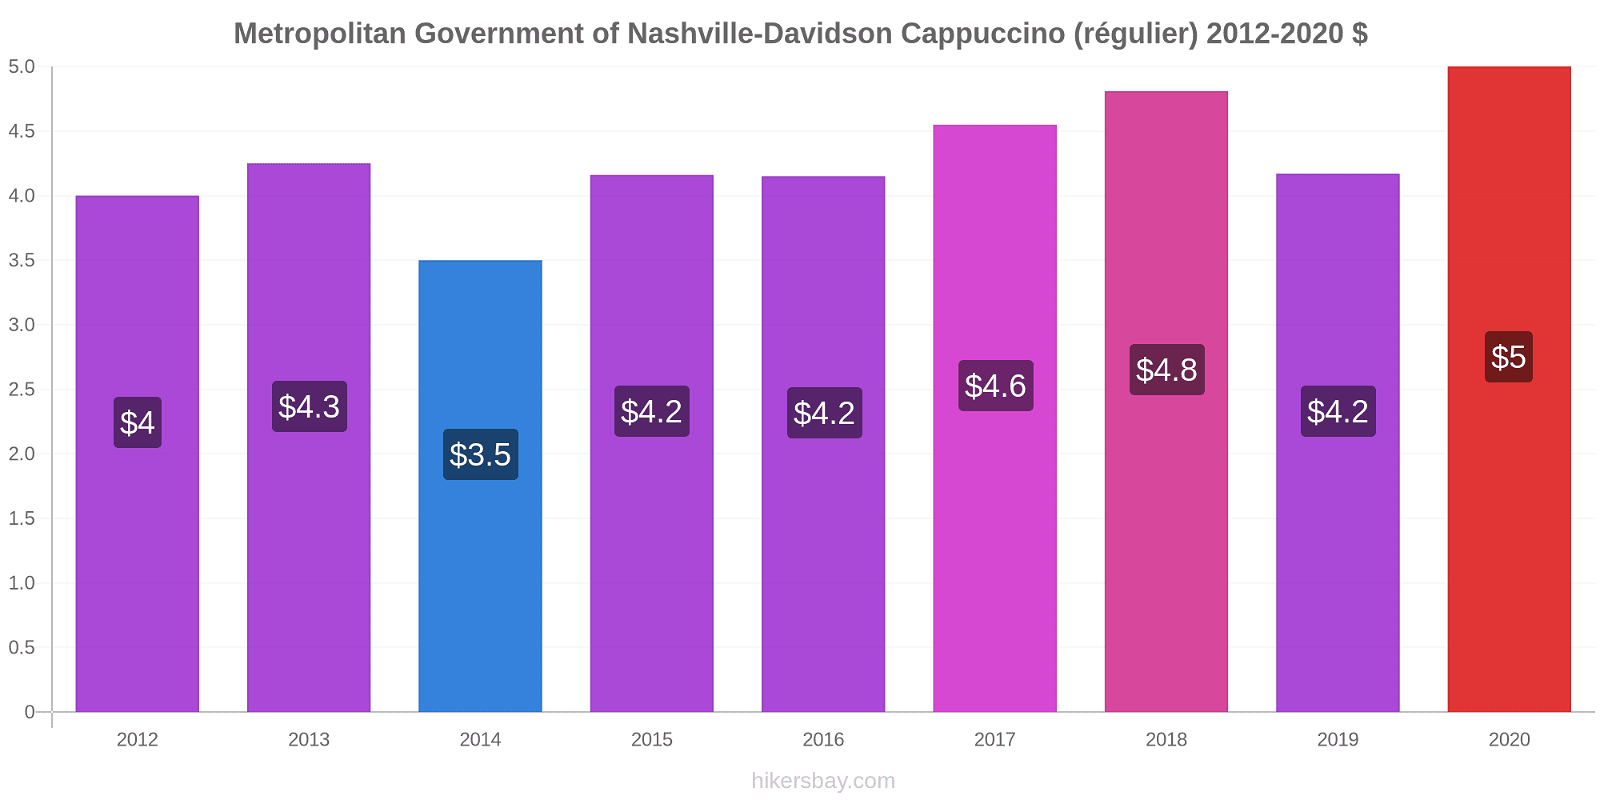 Metropolitan Government of Nashville-Davidson changements de prix Cappuccino (régulier) hikersbay.com